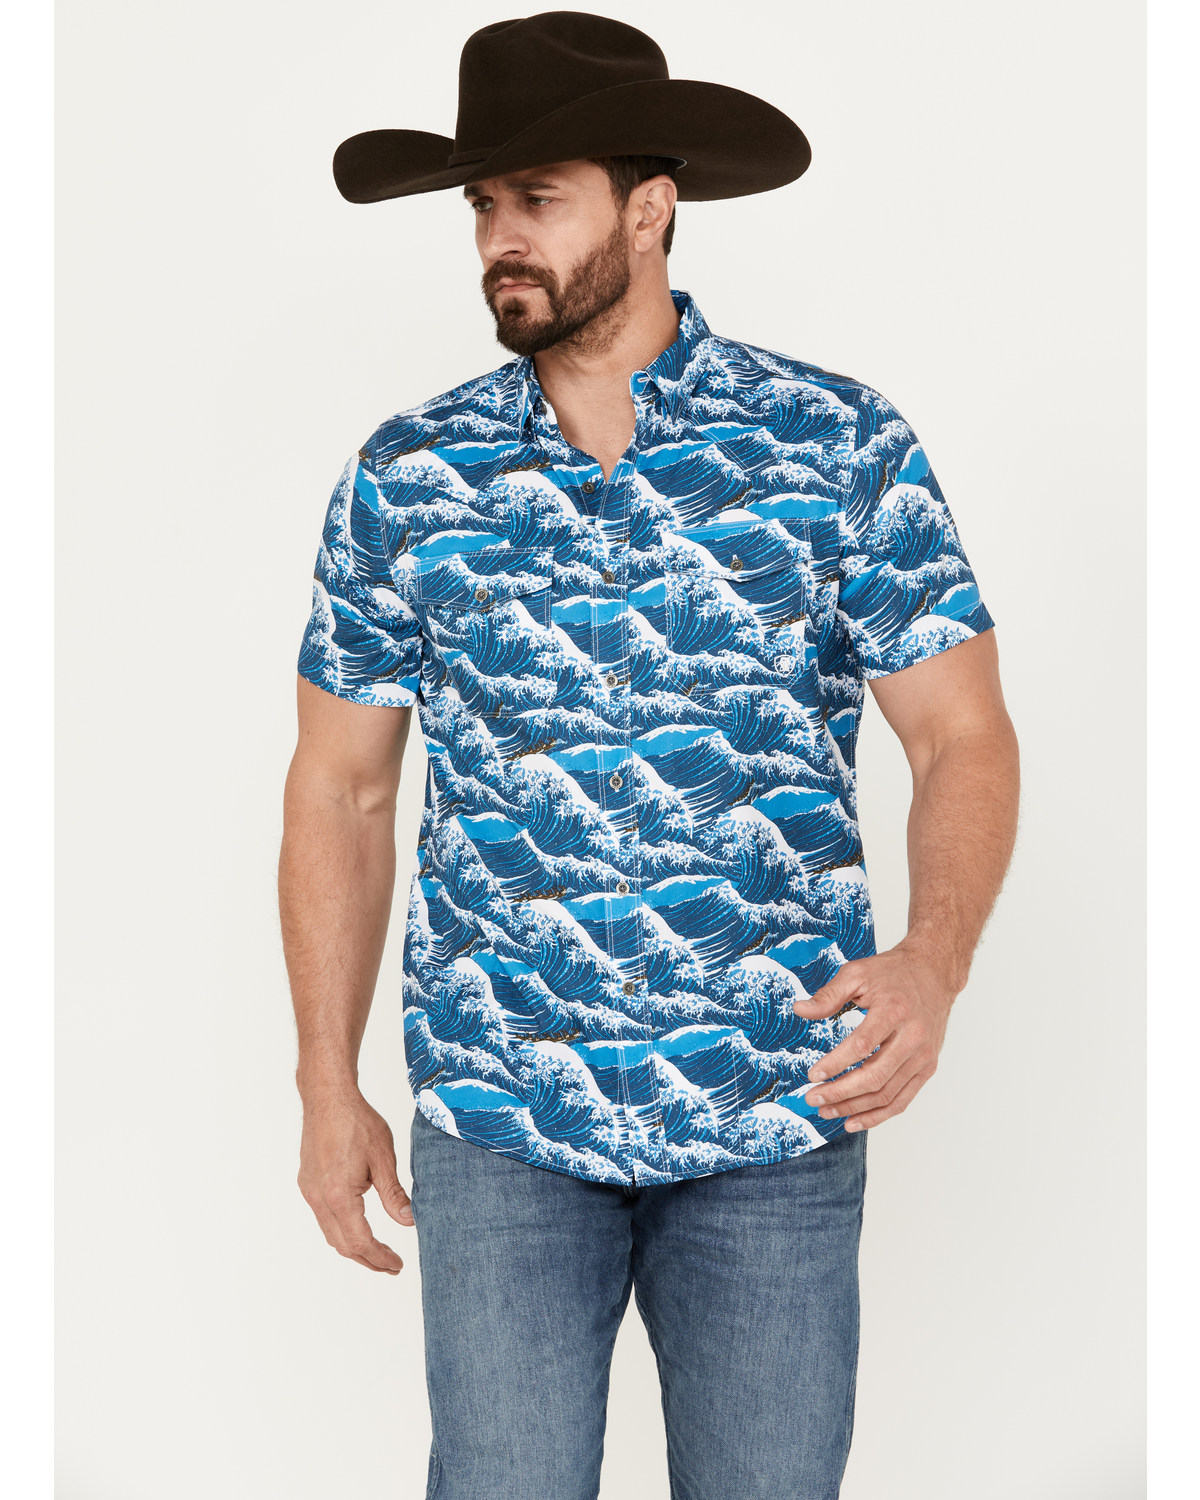 Ariat Men's VentTEK Aloha Fitted Short Sleeve Western Performance Shirt